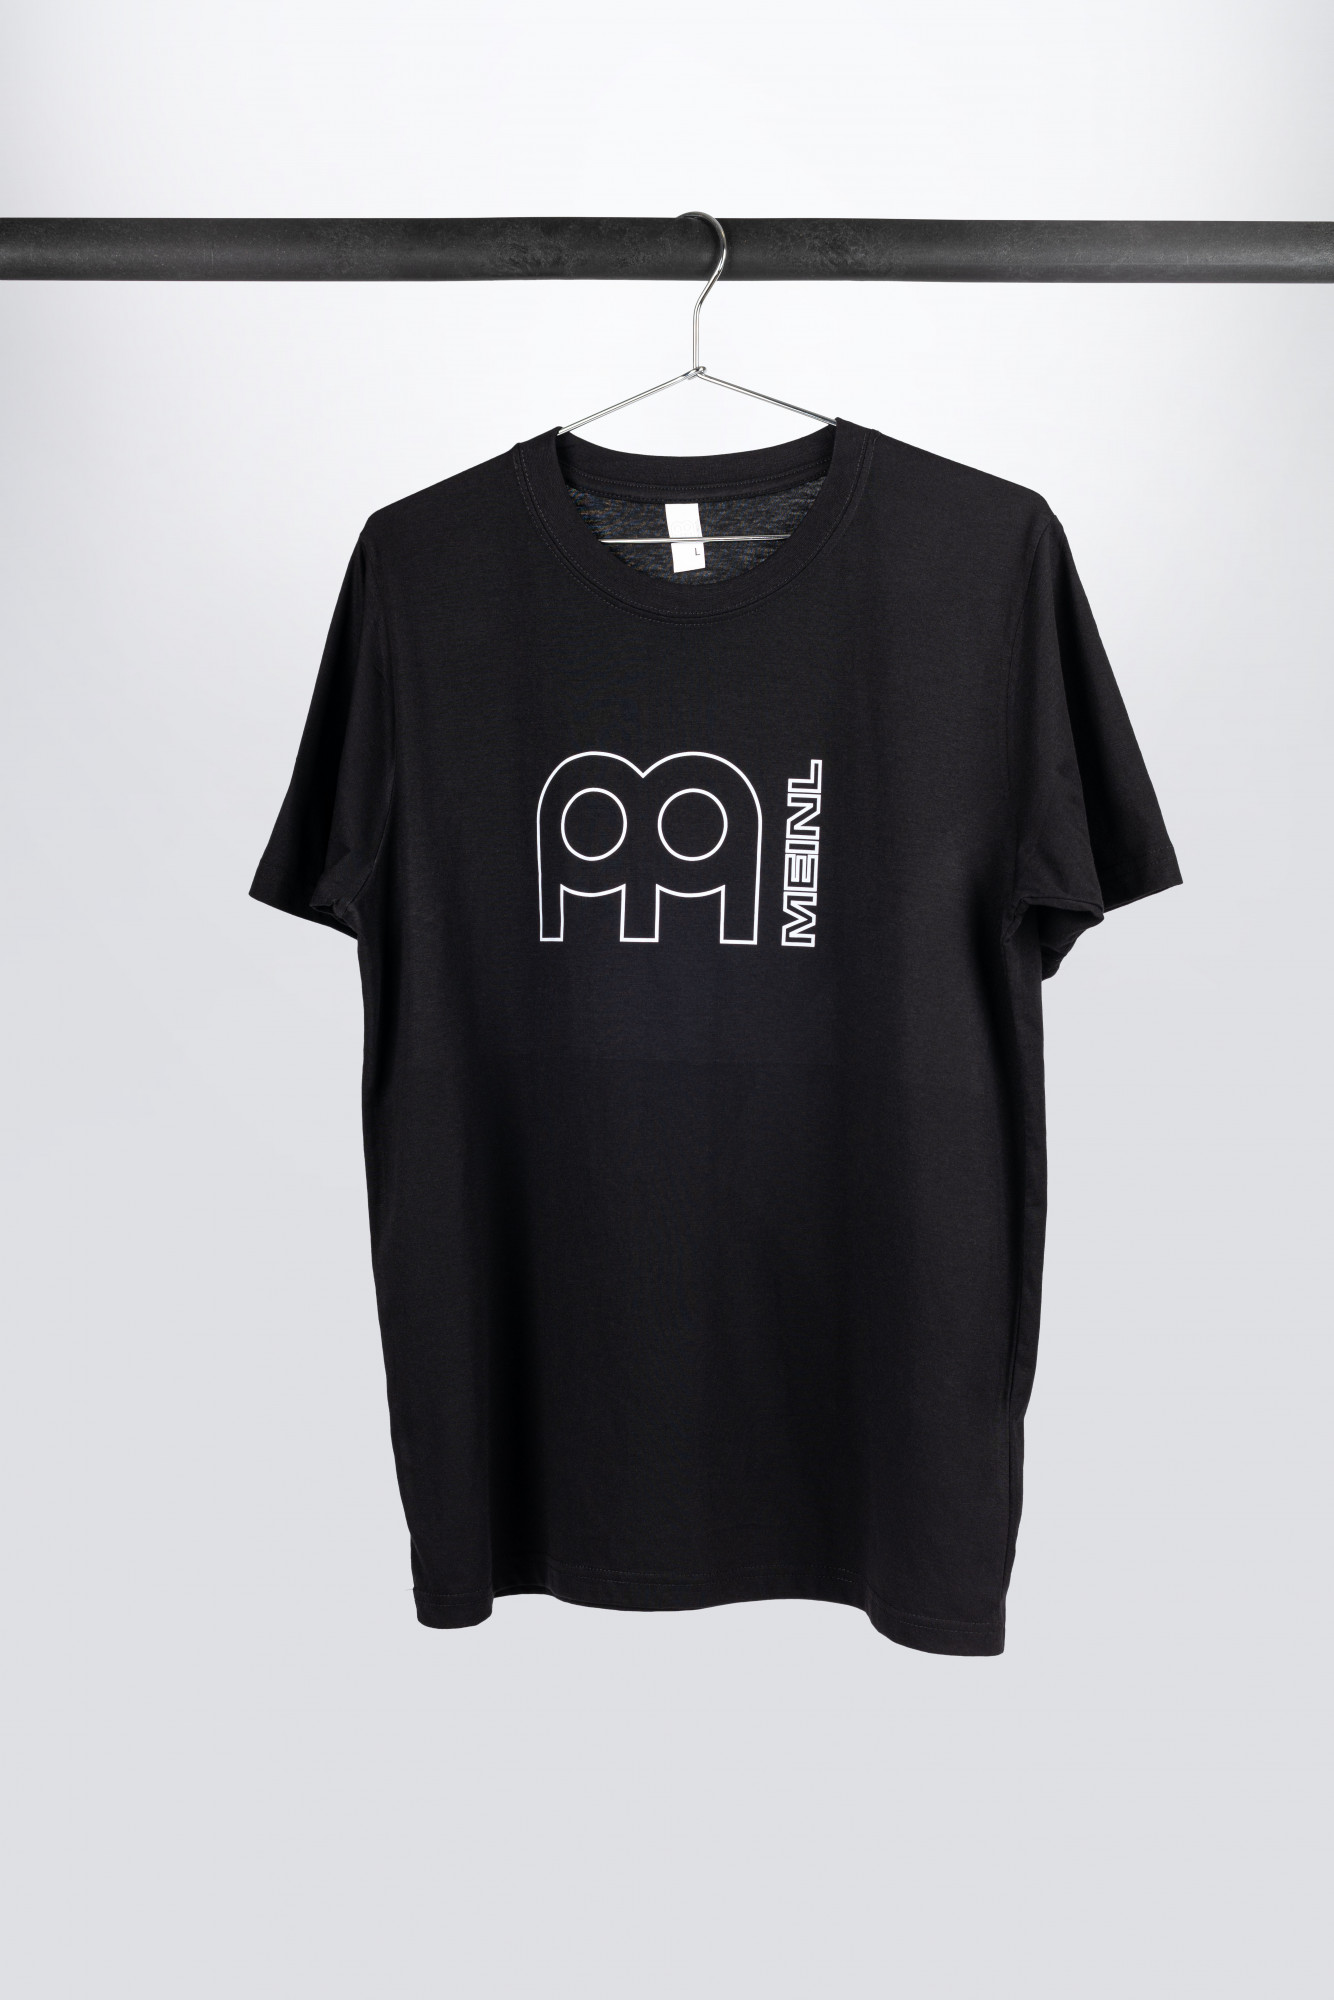 clock Blink virtue Meinl t-shirt black - with hollow Meinl logo (S77) | T-Shirts | Merchandise  | Meinl Cymbals | MEINL Shop